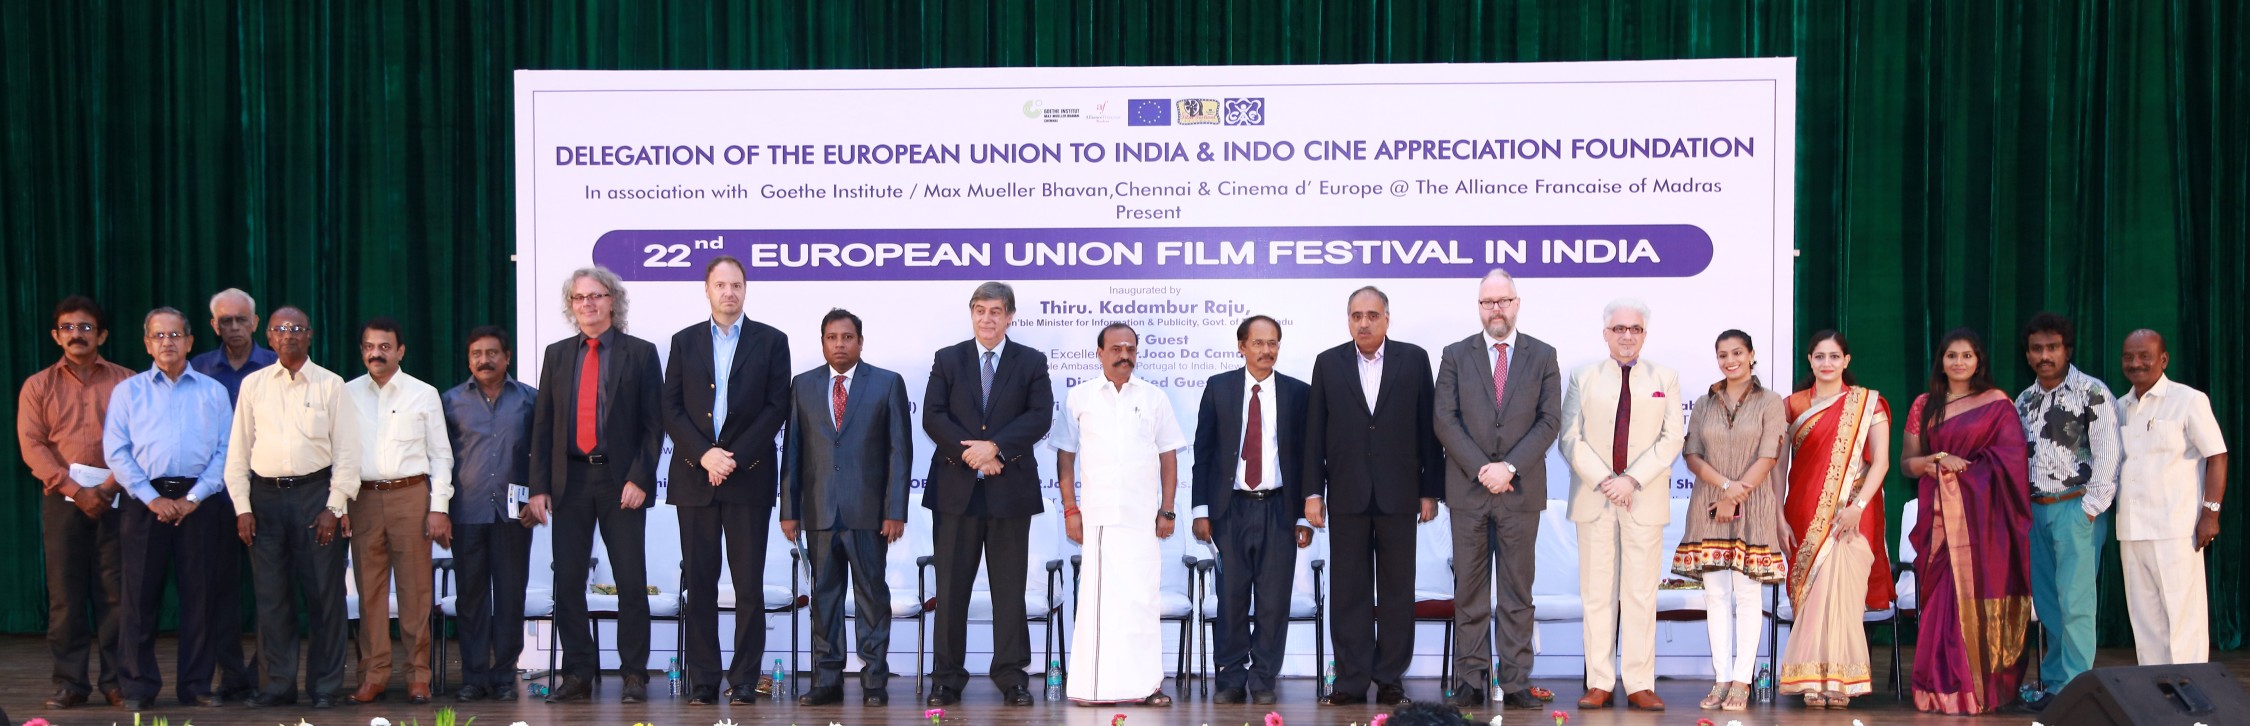 Inauguration of 22nd European Union Film Festival in India Event Stills (51)